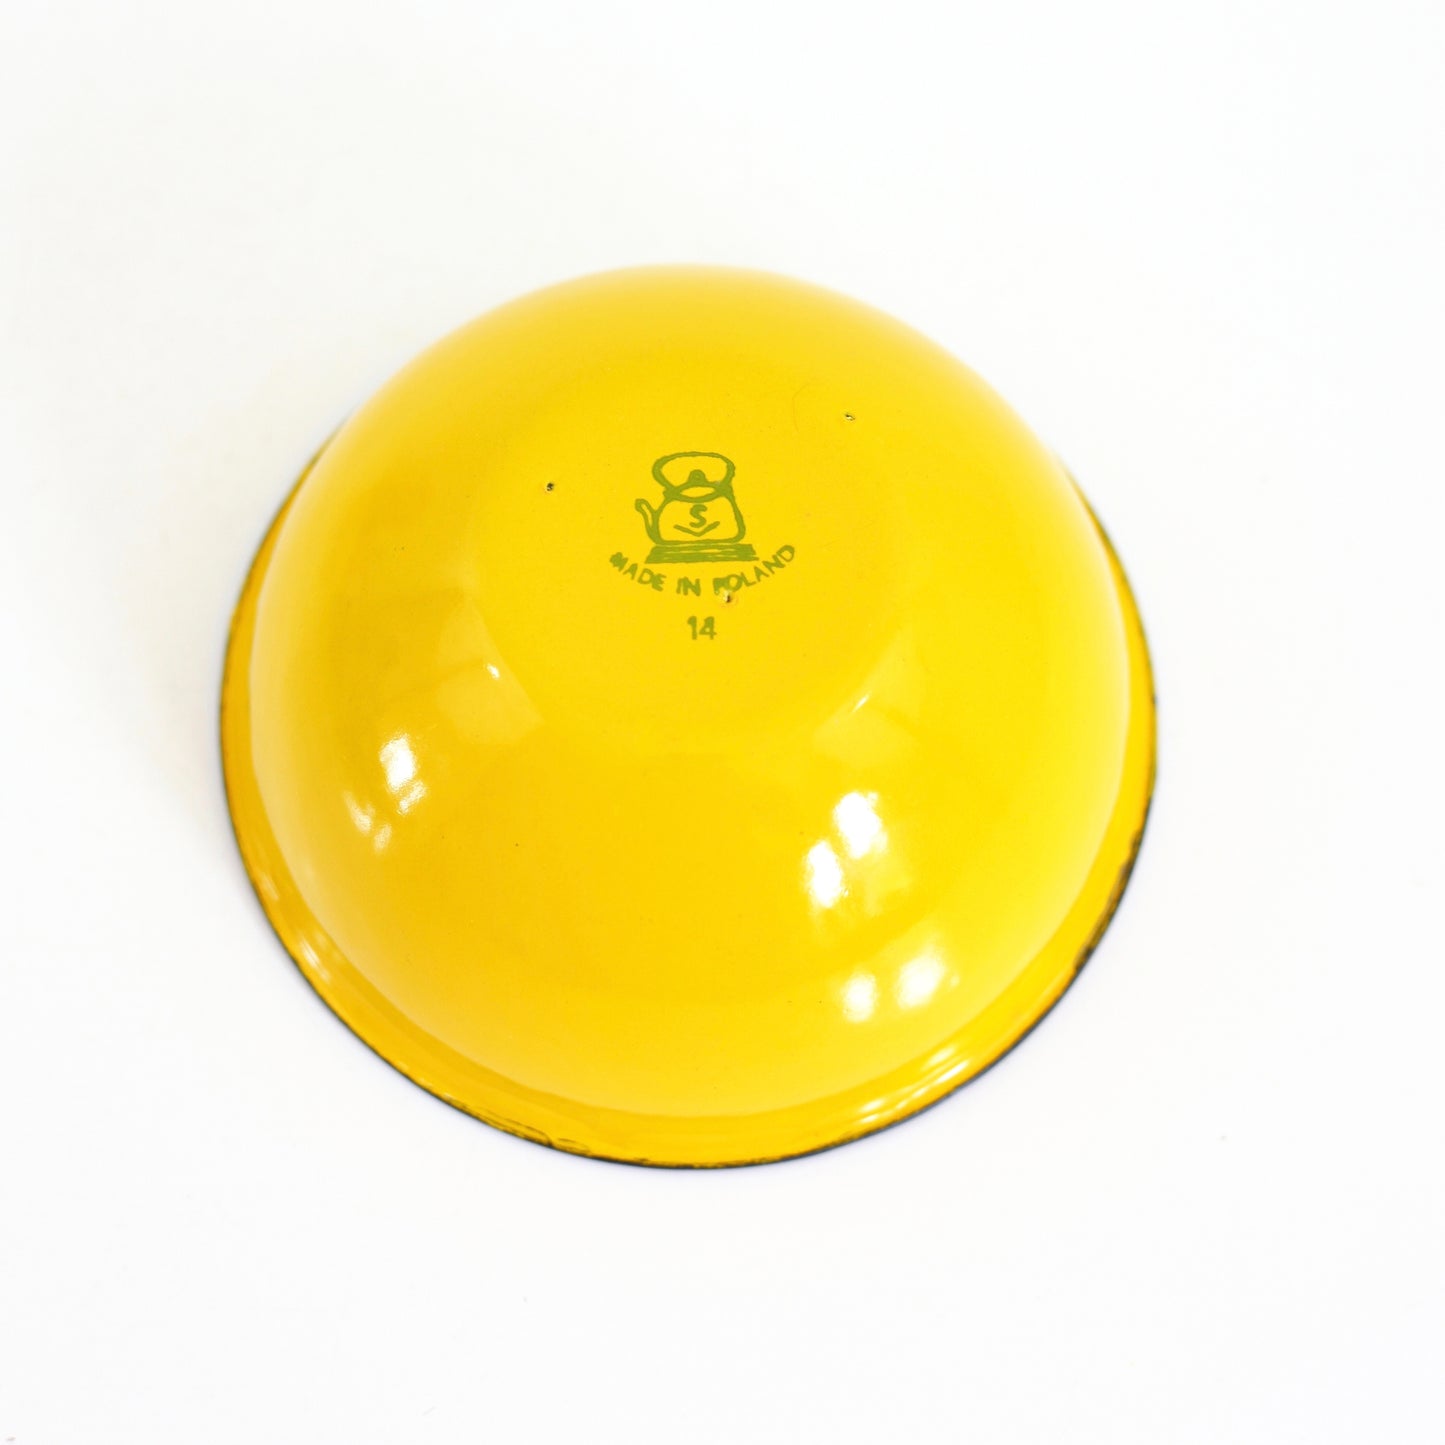 SOLD - Vintage Yellow Enamel Bowl